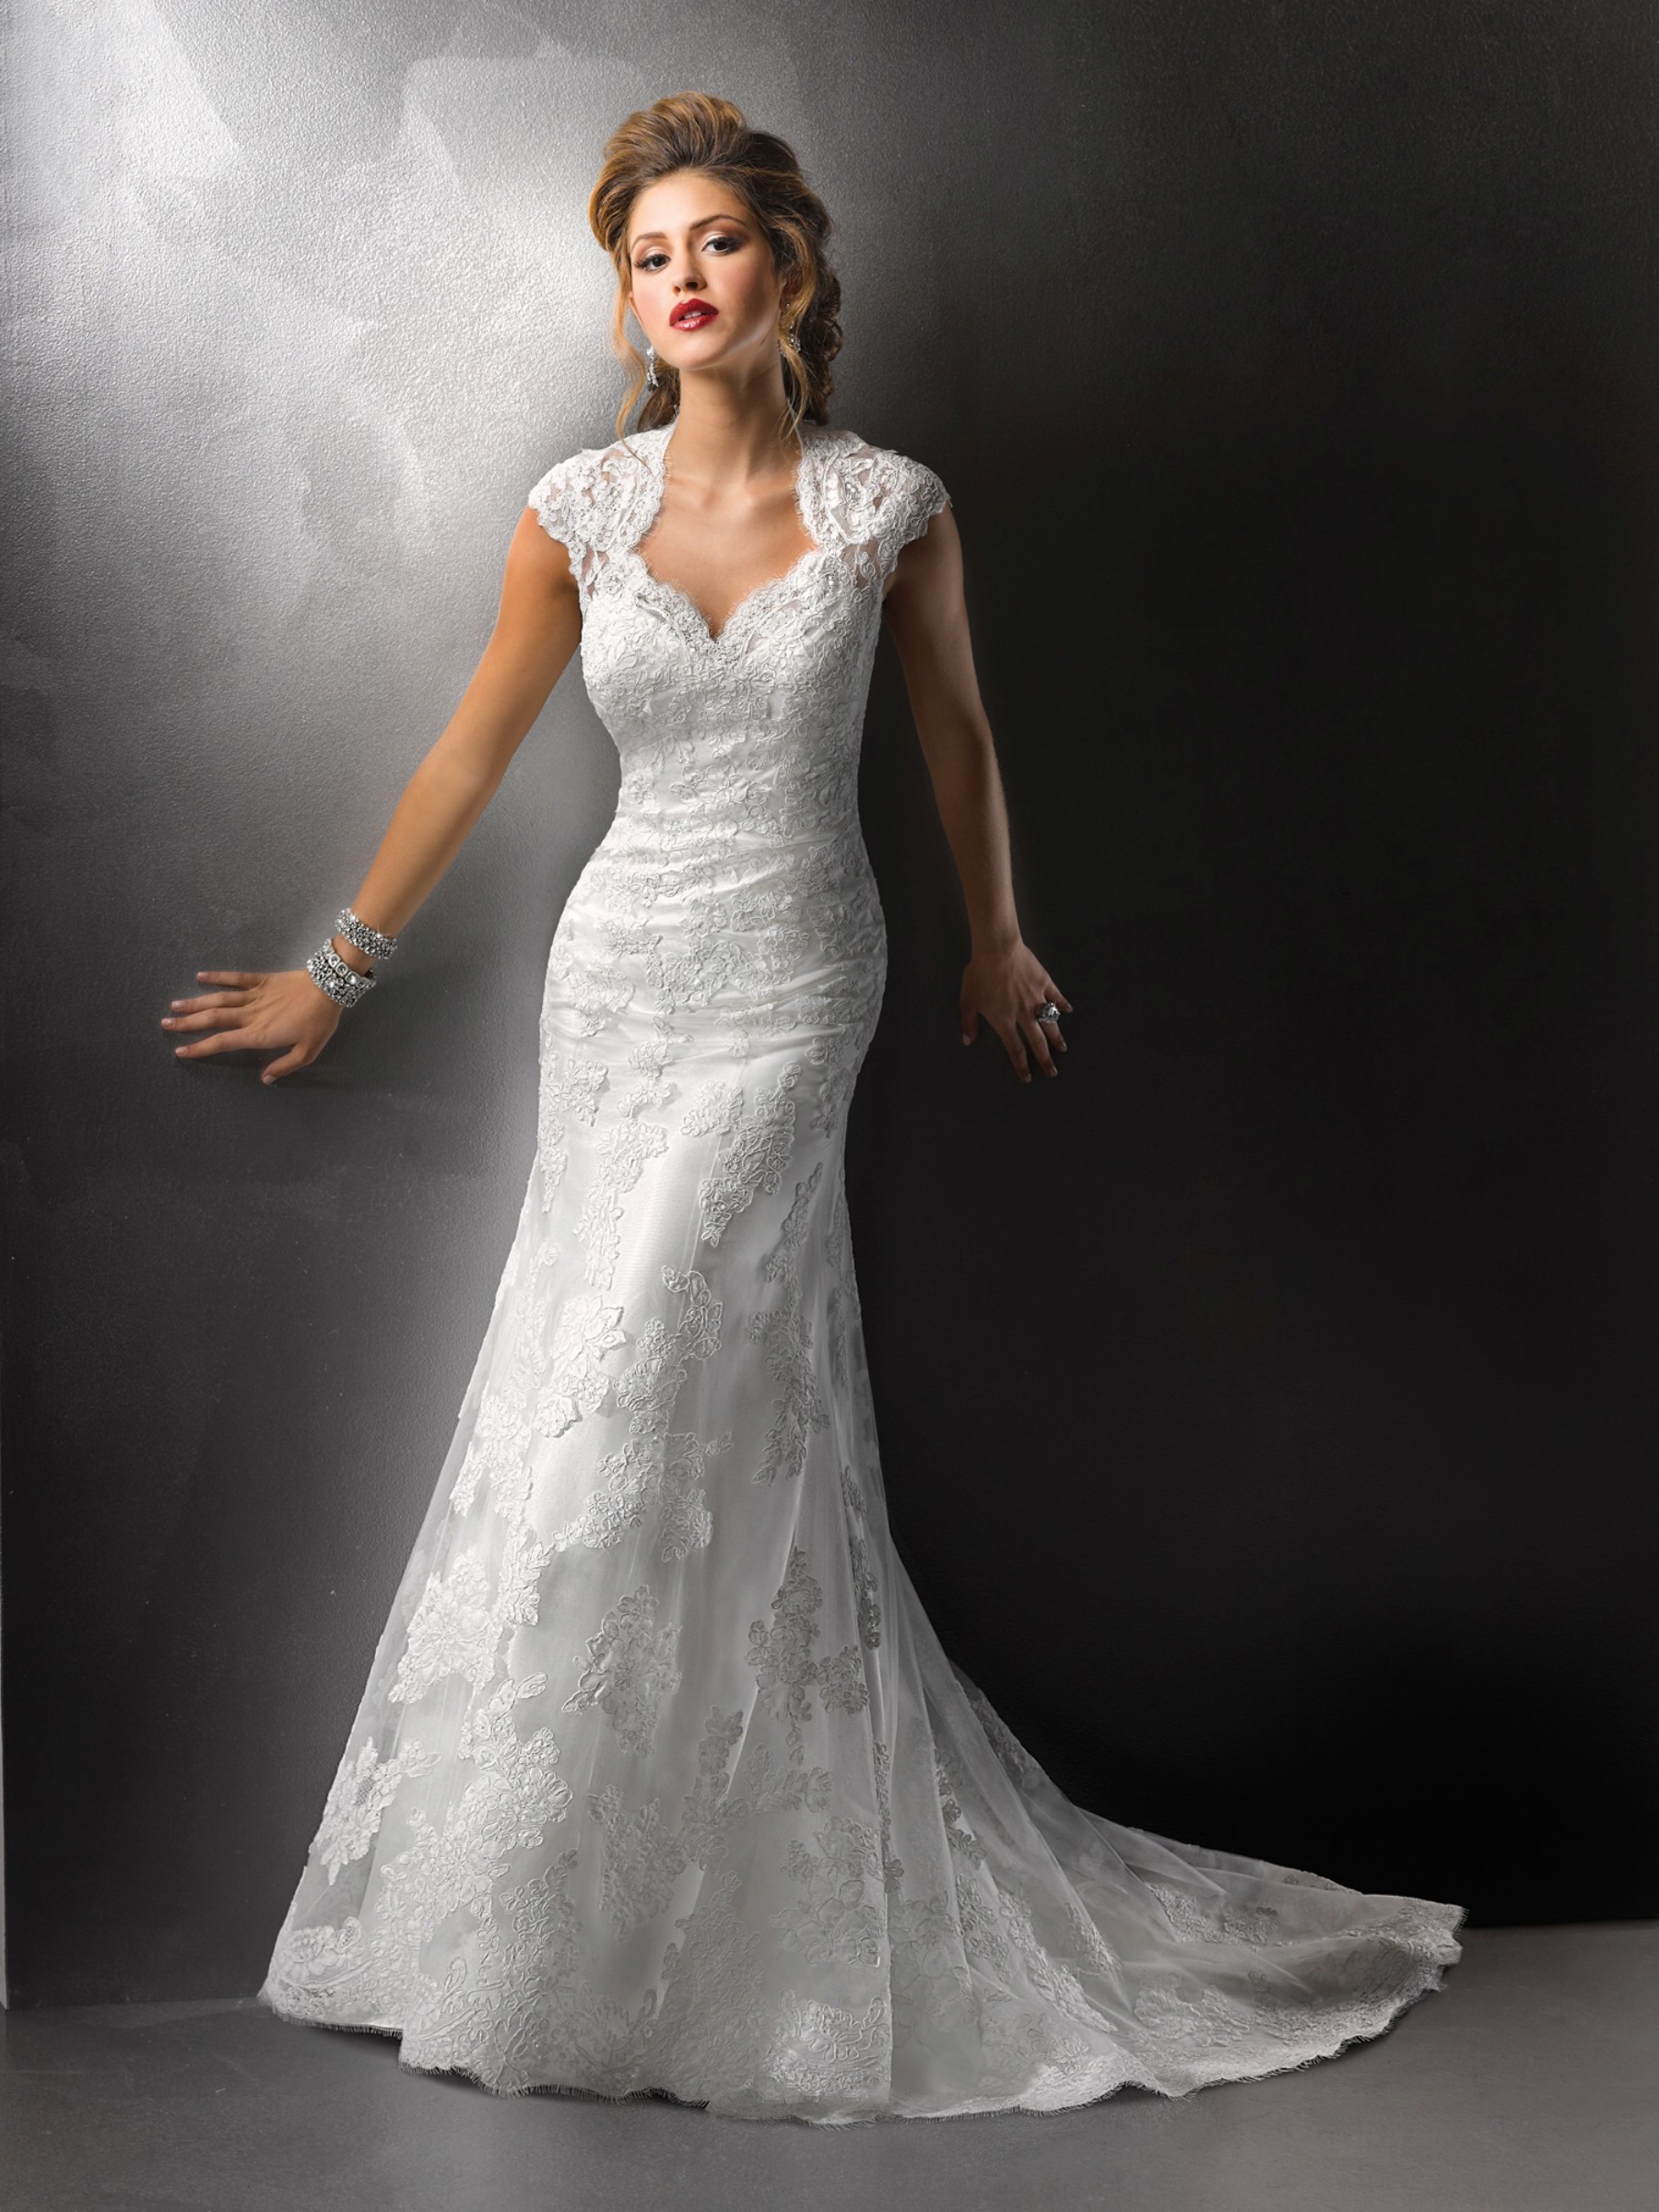 14 Cheap Wedding Dresses Under 100 - GetFashionIdeas.com ...